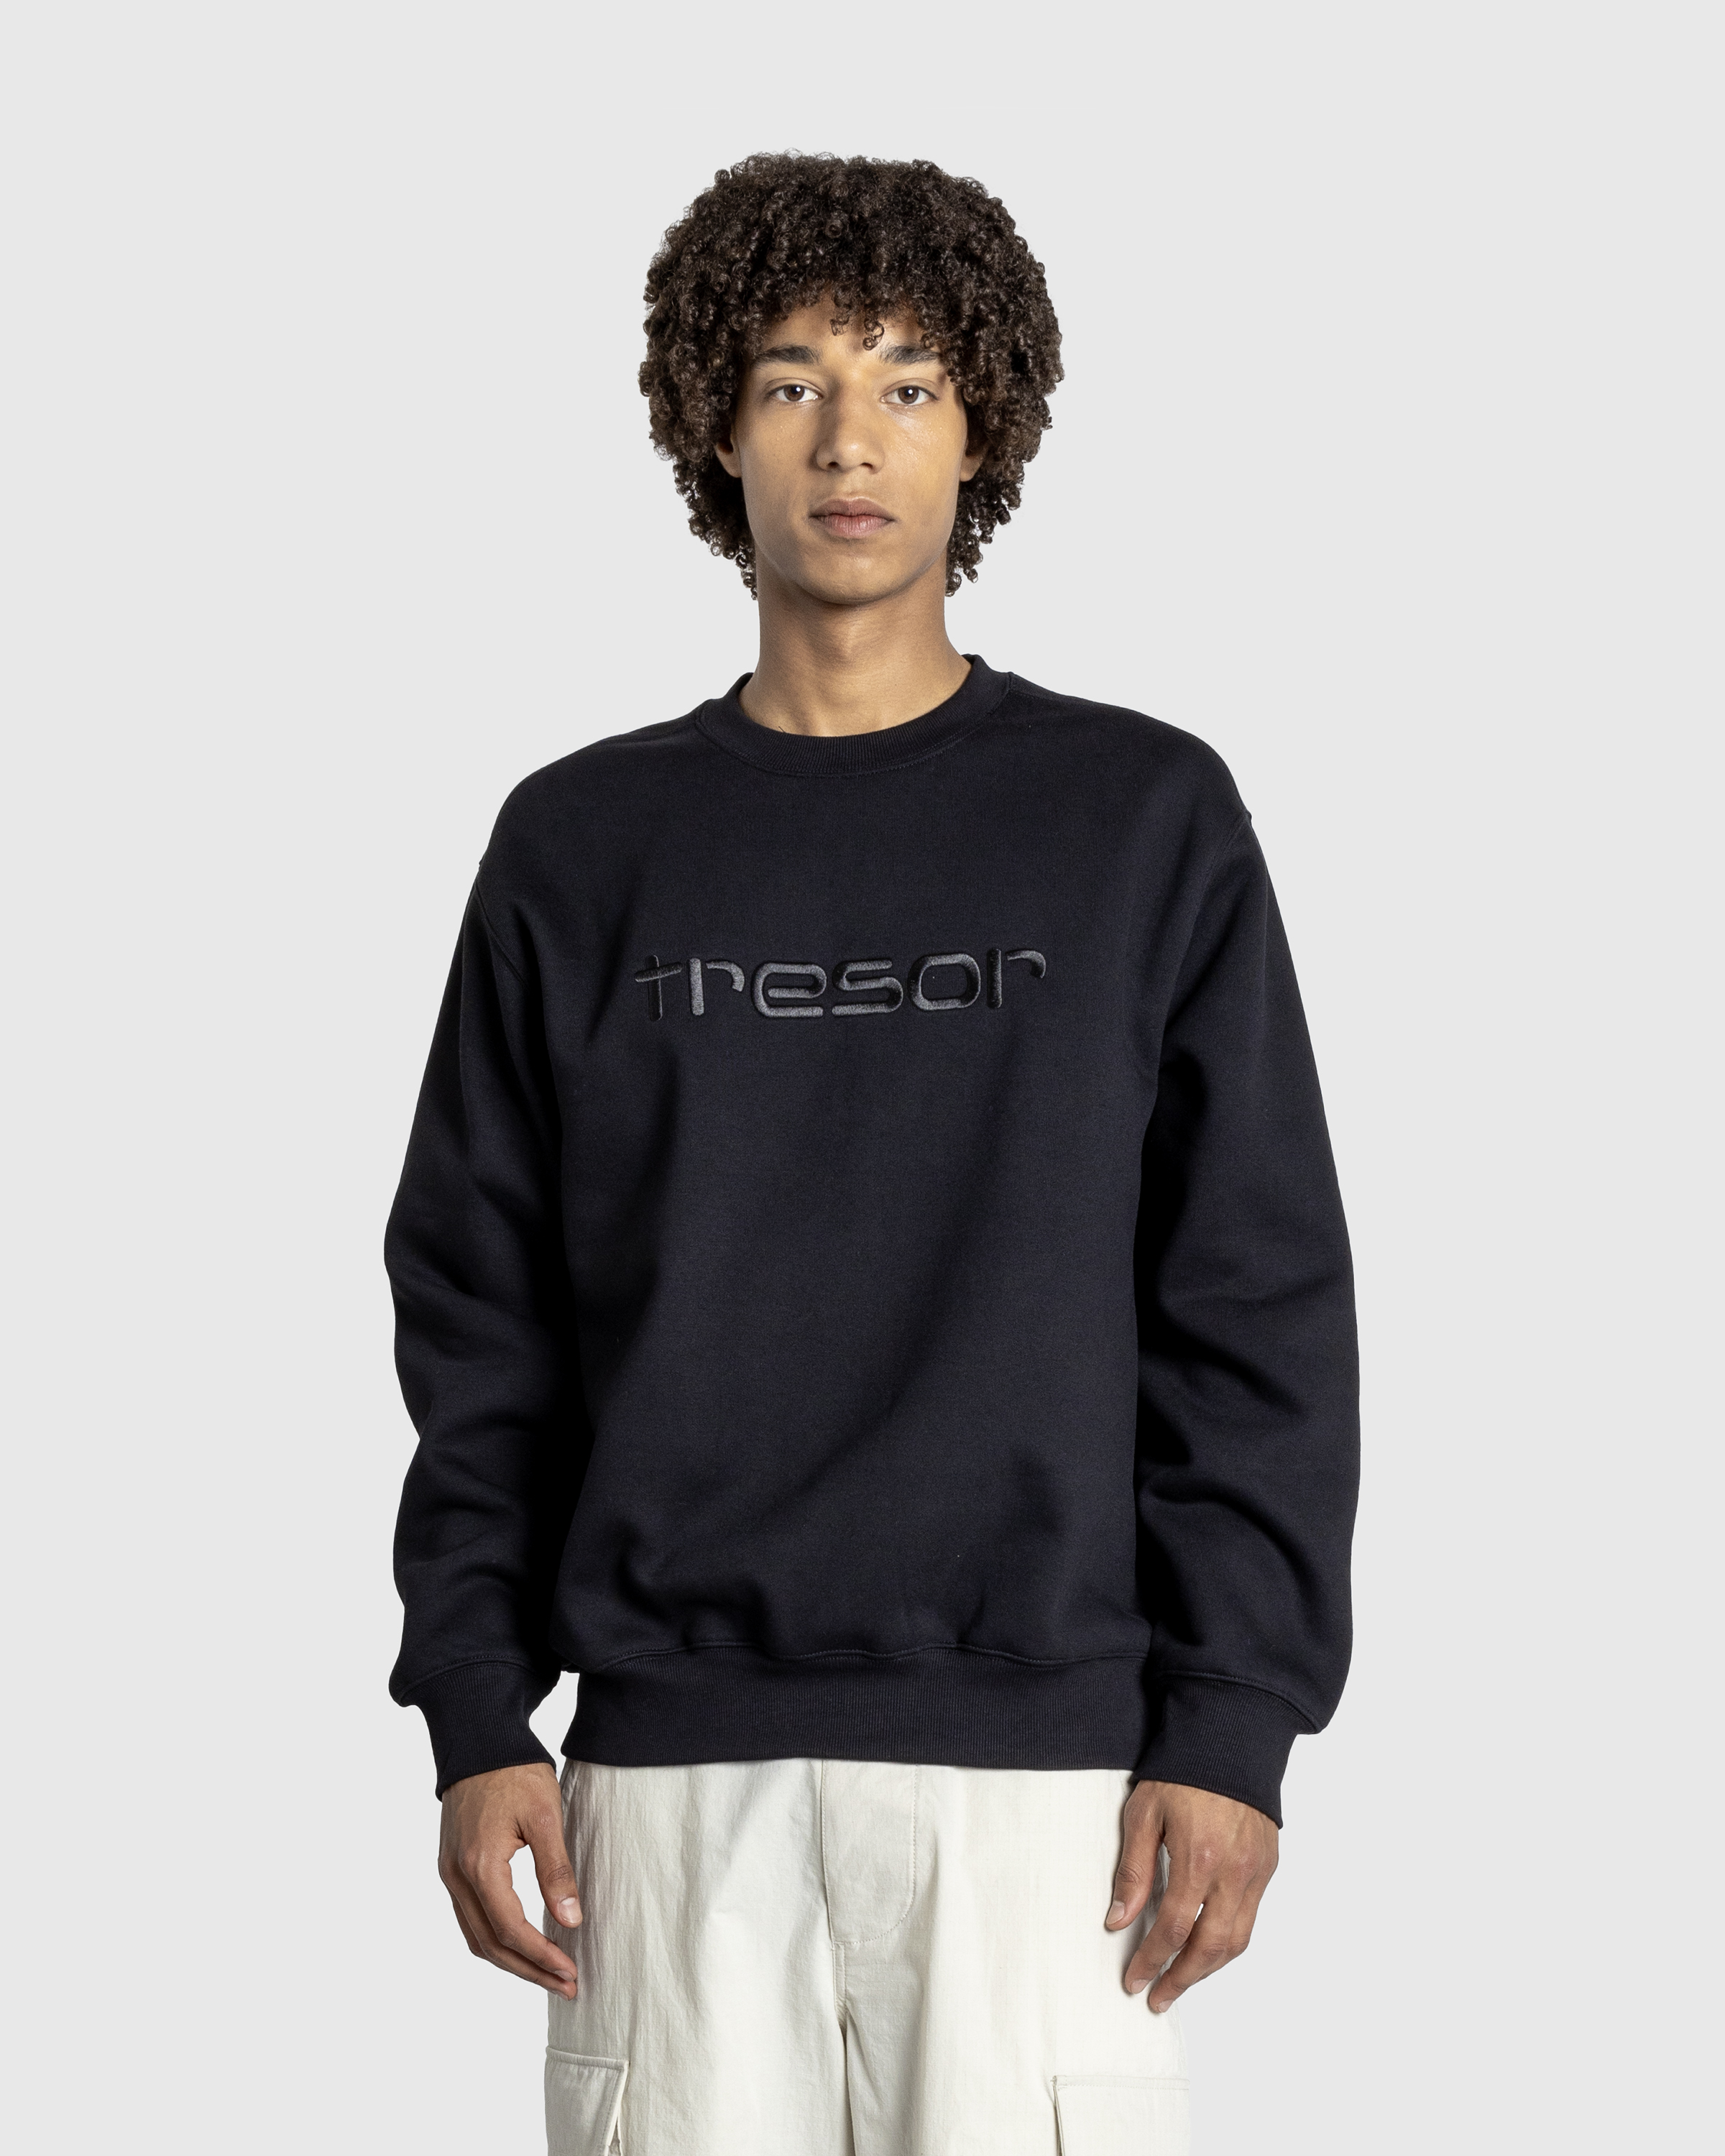 Carhartt WIP x Tresor – Techno Alliance Sweatshirt Black/Grey - Knitwear - Black - Image 2